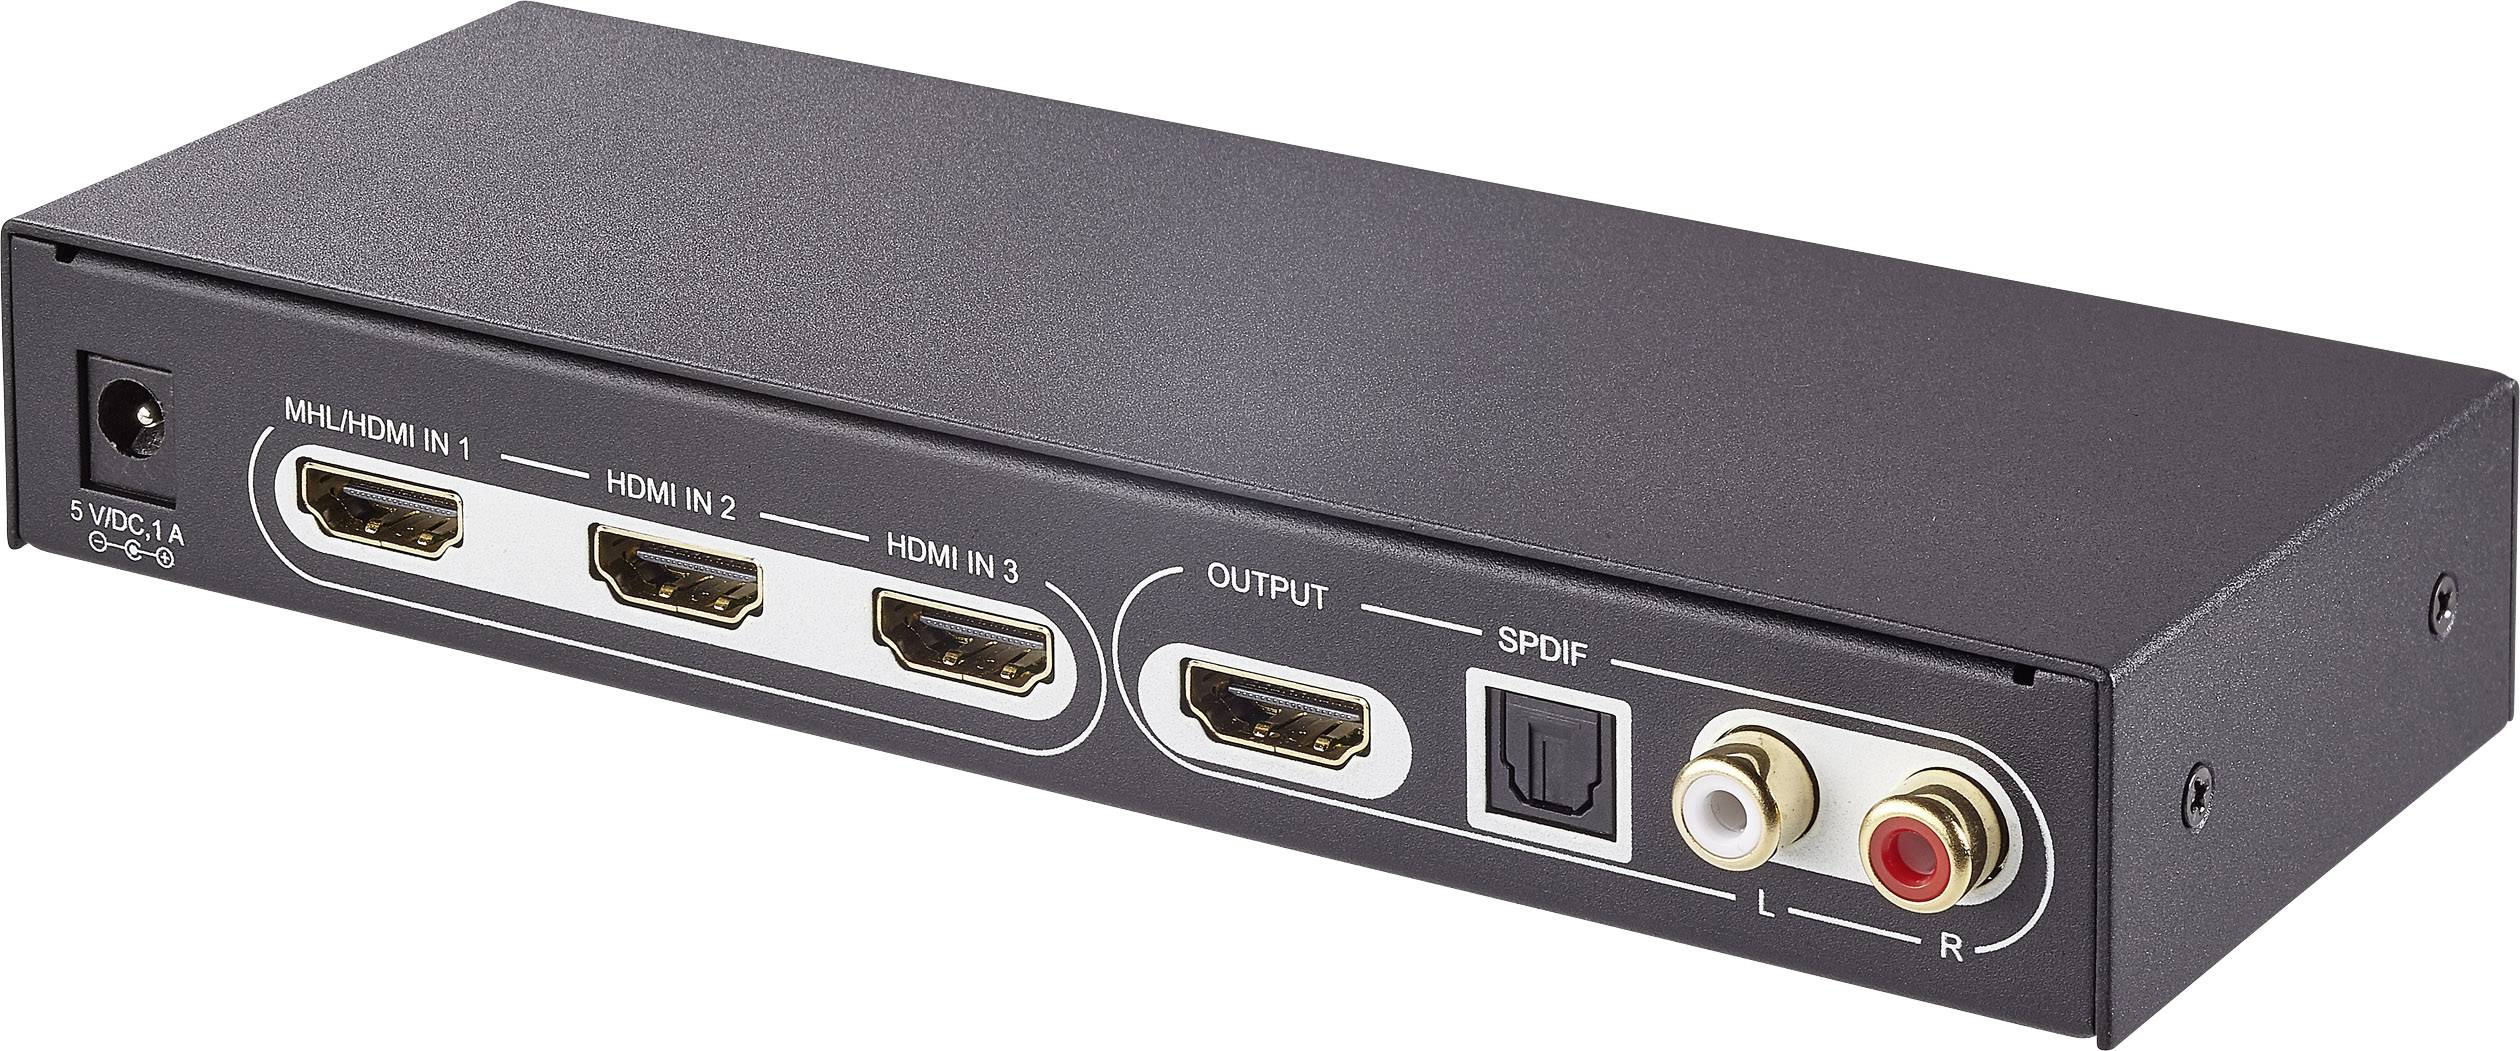 SpeaKa Professional SP-5441116 3 ports HDMI switch 3D playback mode, + remote control, ARC (Audio Return Channel) 3840 | Conrad.com